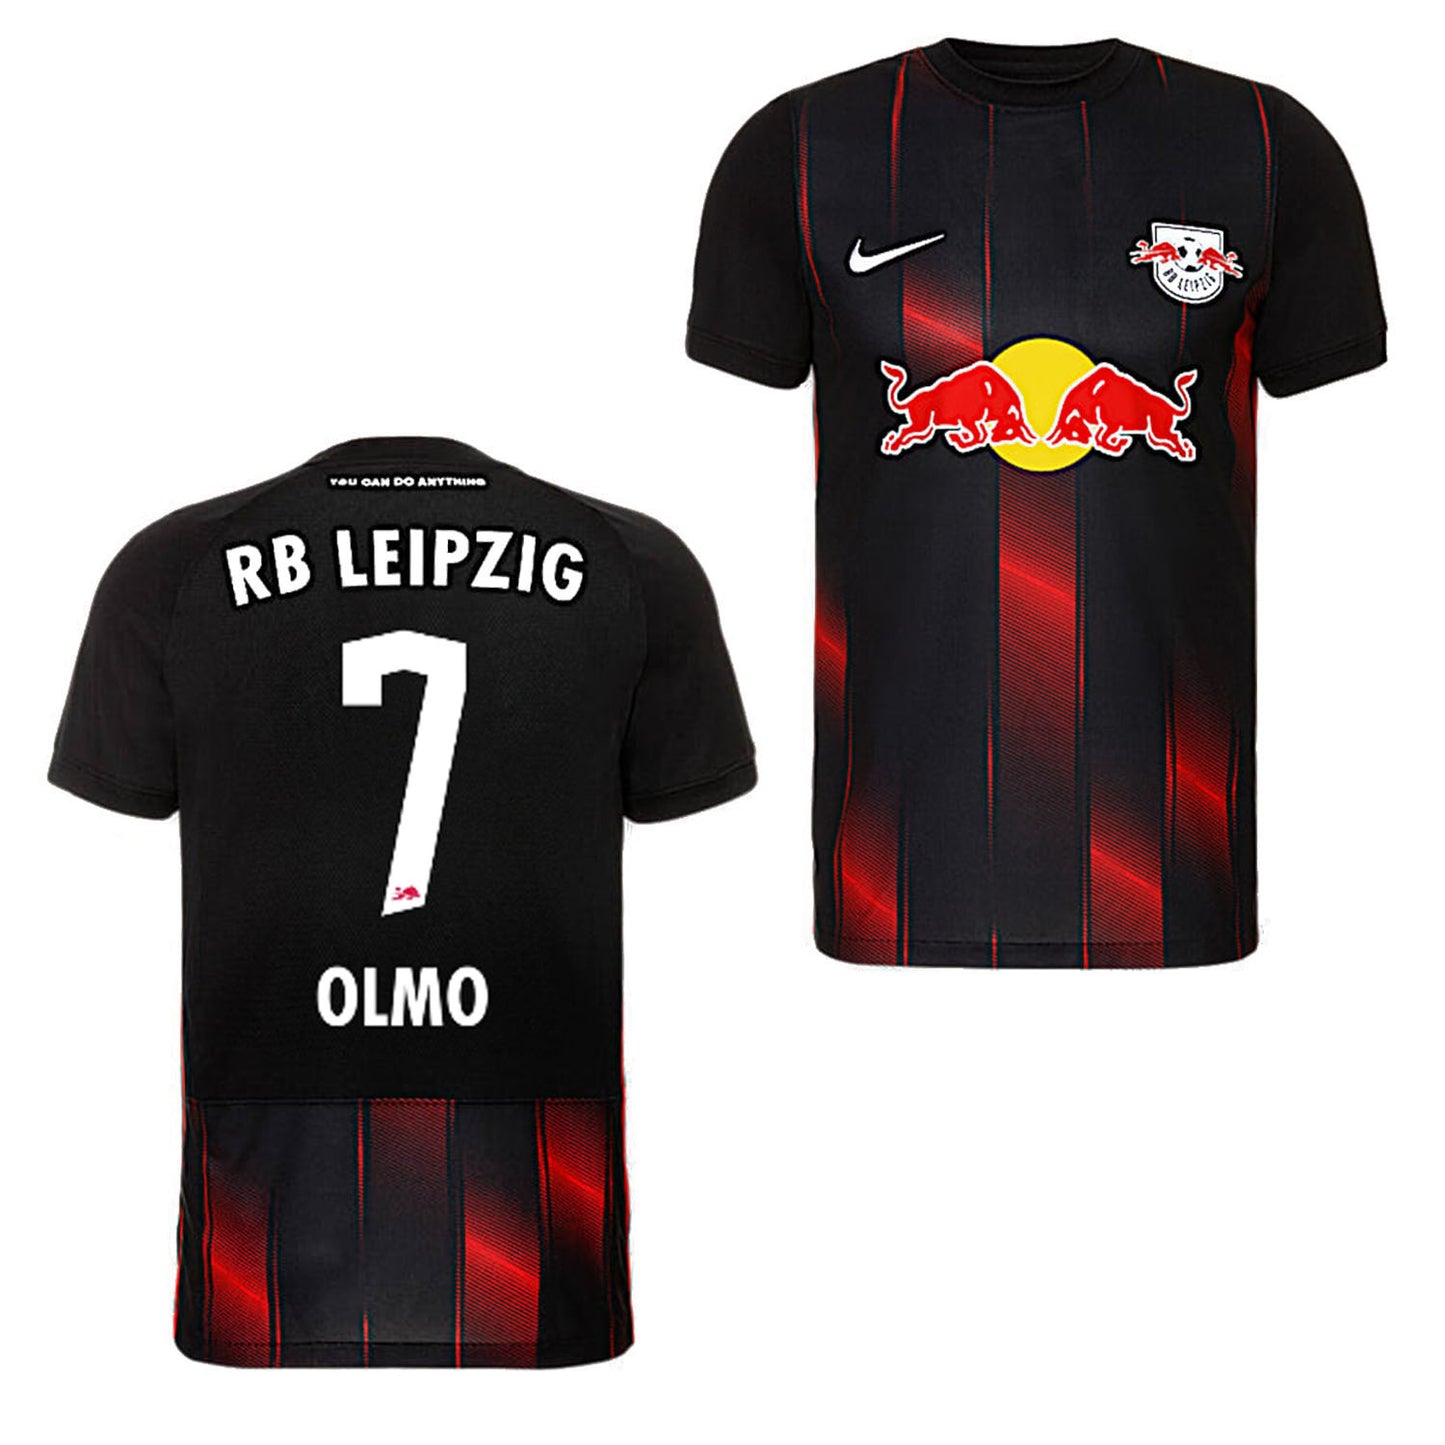 Dani Olmo RB Leipzig 7 Jersey